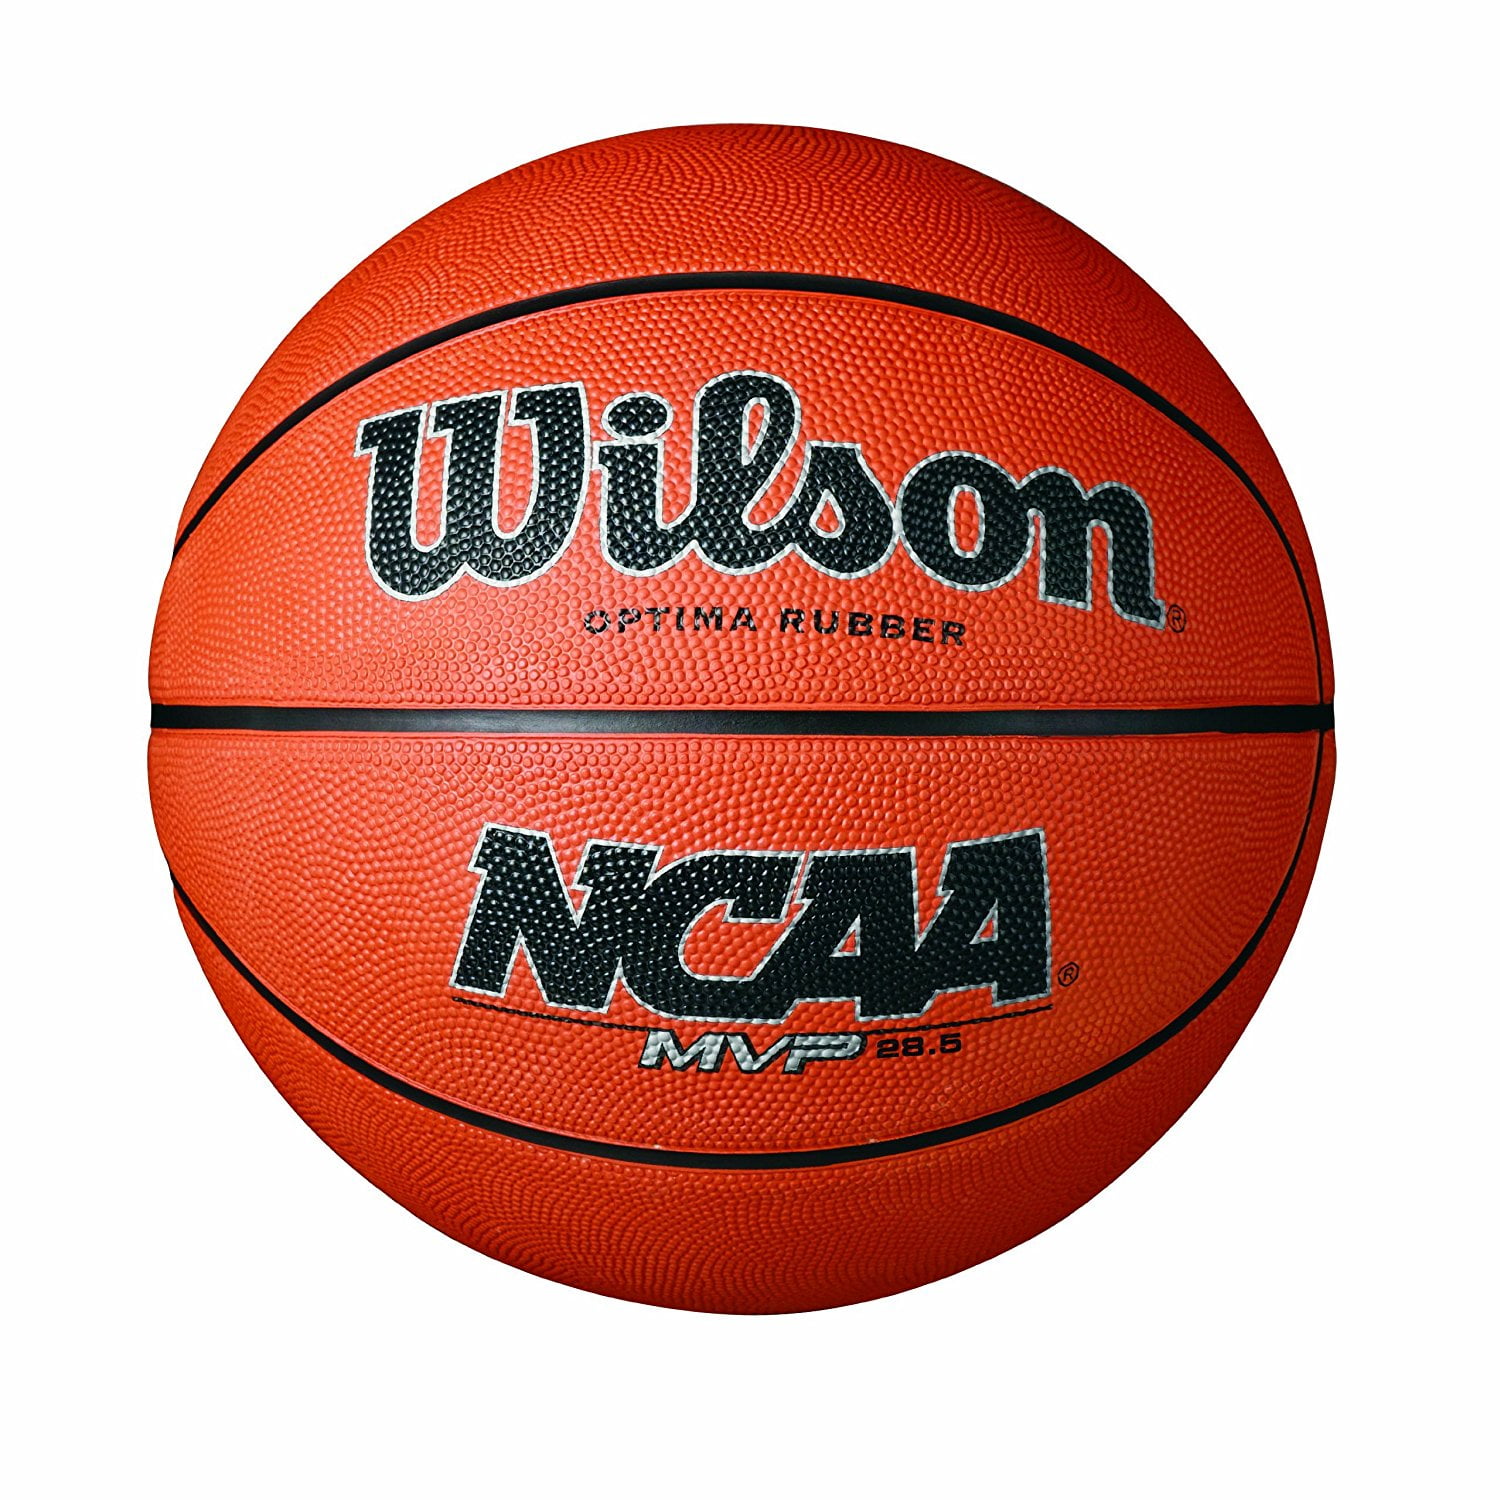 Basketball Tachikara size 7 29.5" Rubber Indoor Outdoor Ball Orange and White 